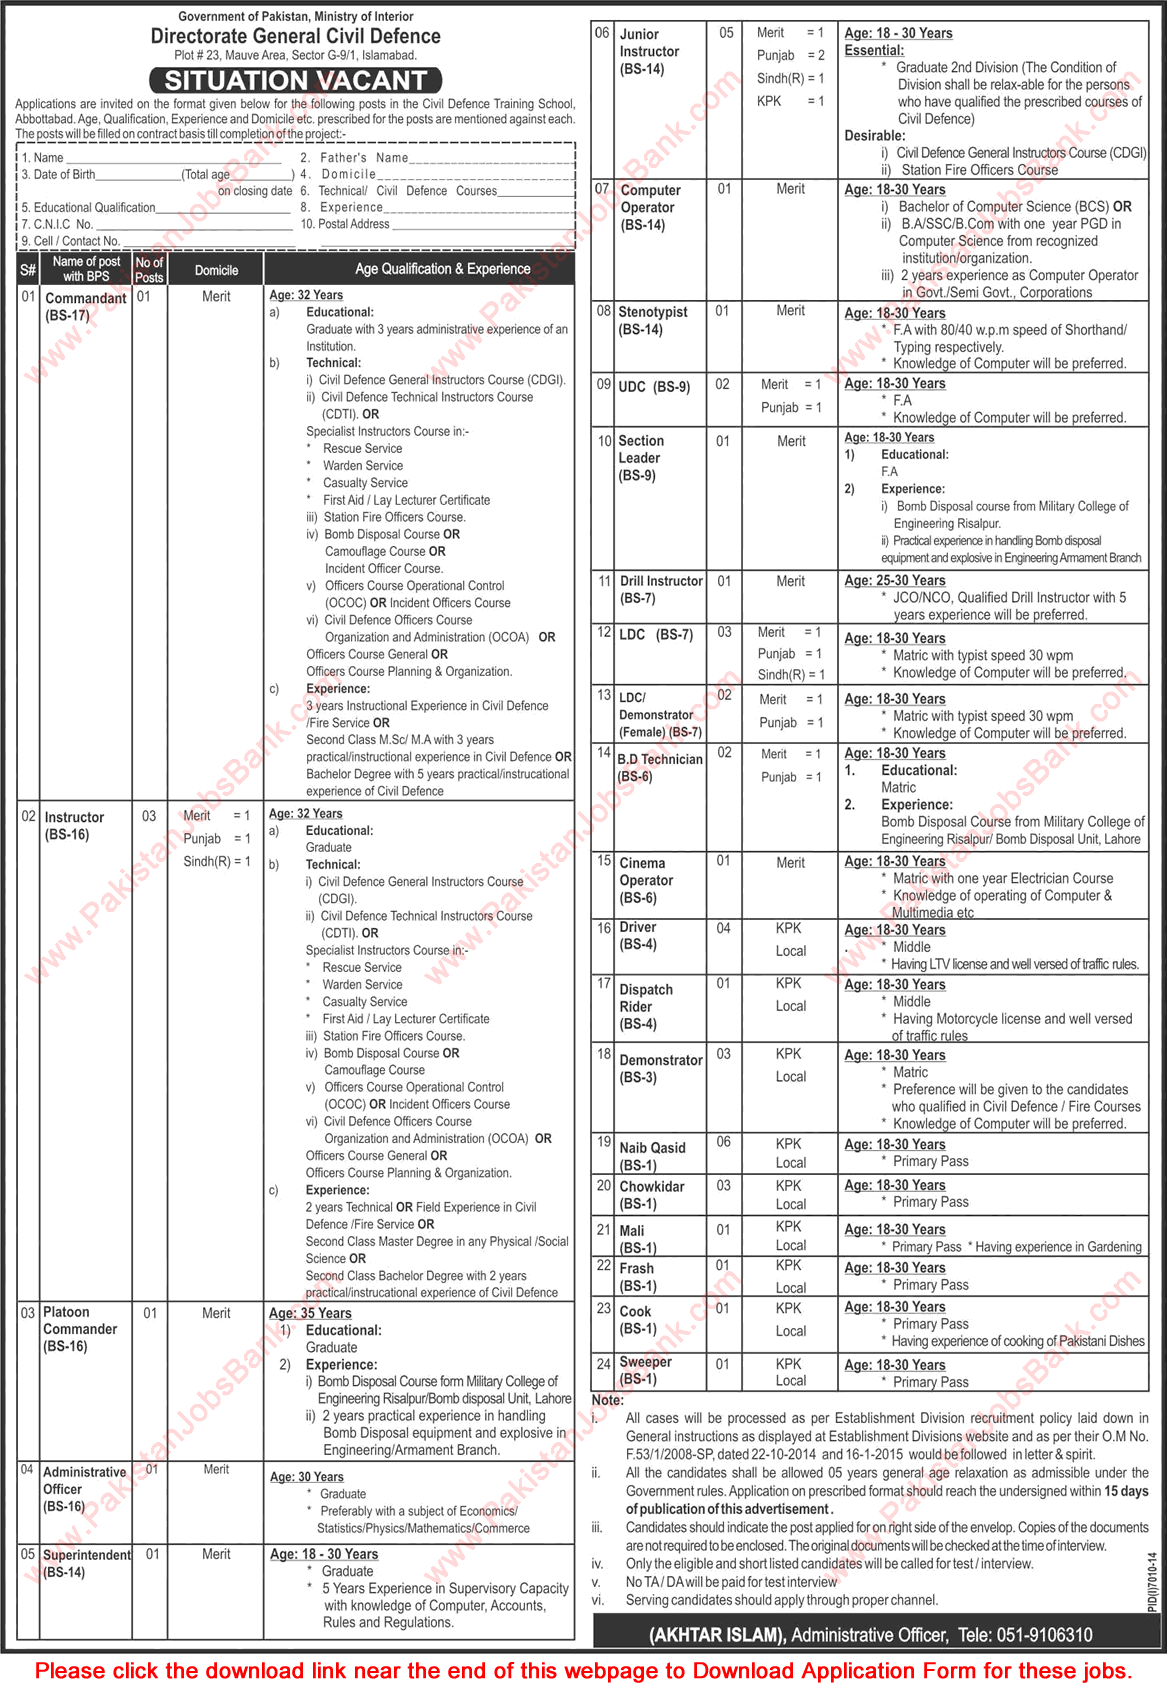 Directorate General Civil Defence Pakistan Jobs 2015 June / July Application Form Download Latest